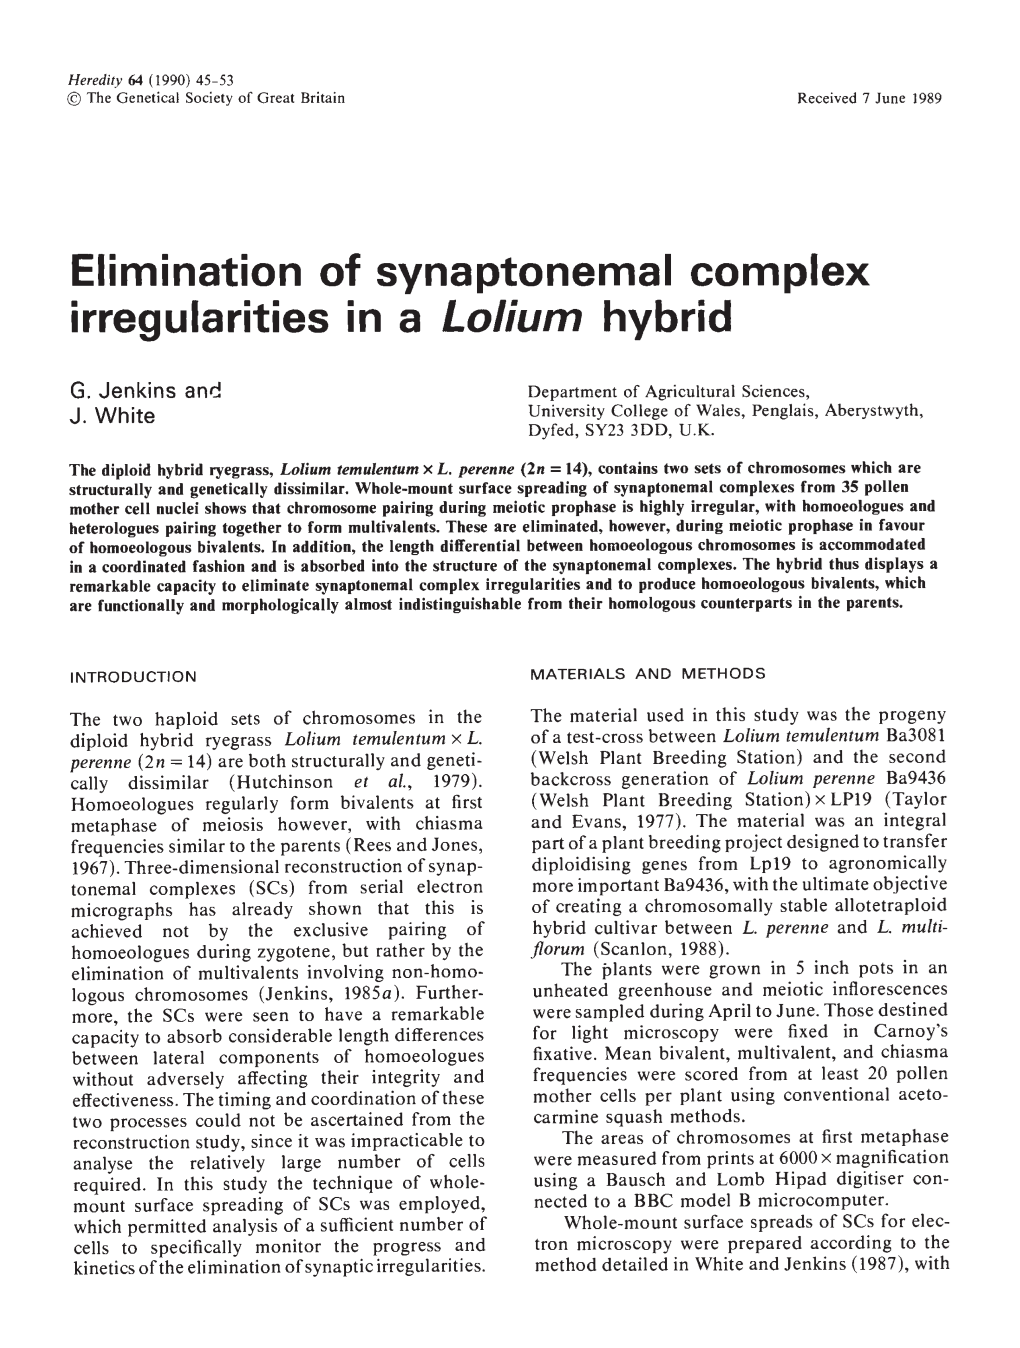 Elimination of Synaptonemal Complex Irregularities in a Lolium Hybrid